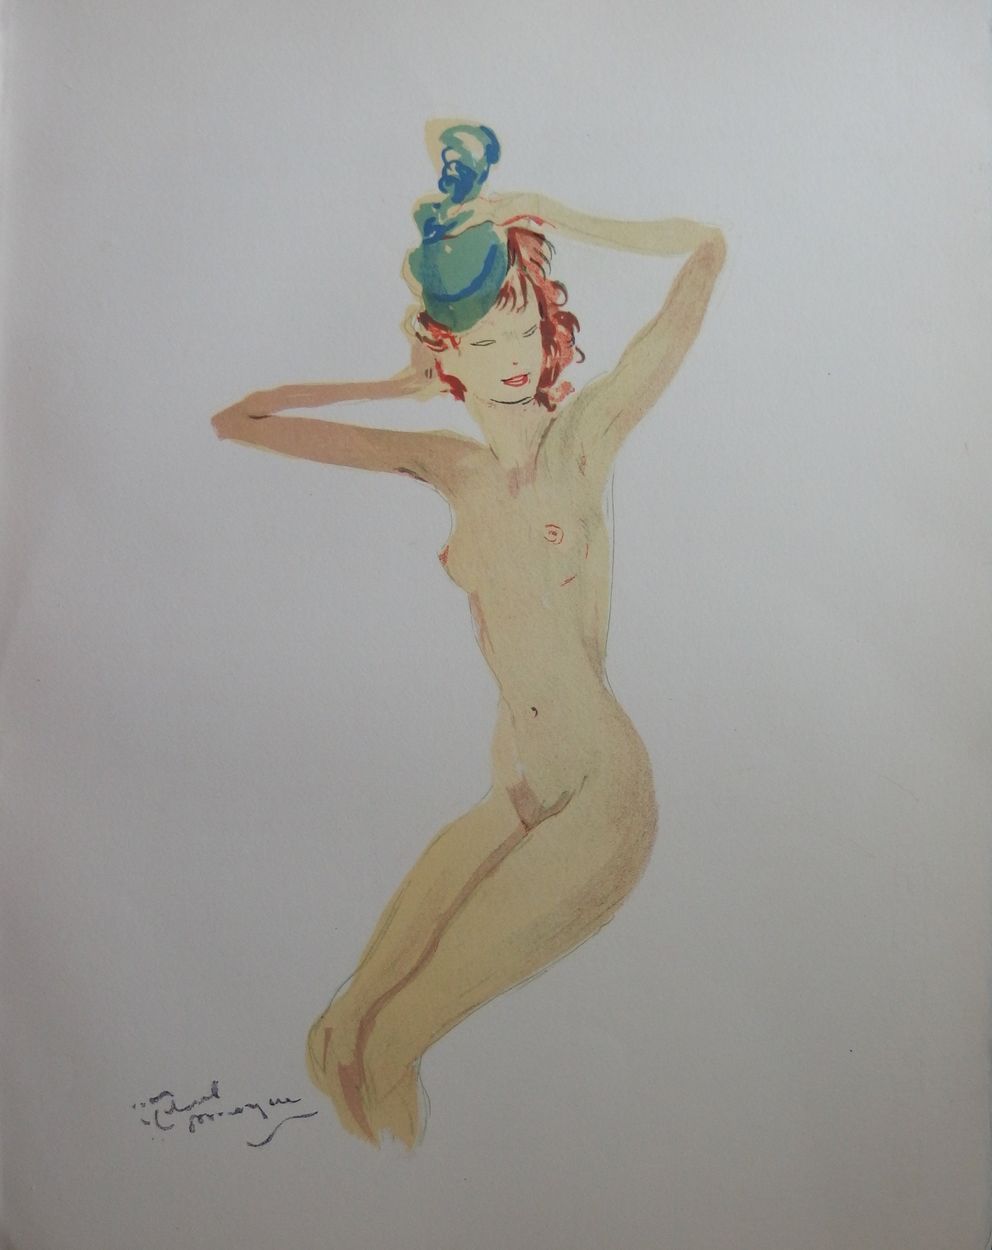 Null Jean-Gabriel DOMERGUE

戴着小帽子的裸体女人

原始石版画

板块中的签名

牛皮纸上 40 x 31 cm

状况极佳

信息&hellip;